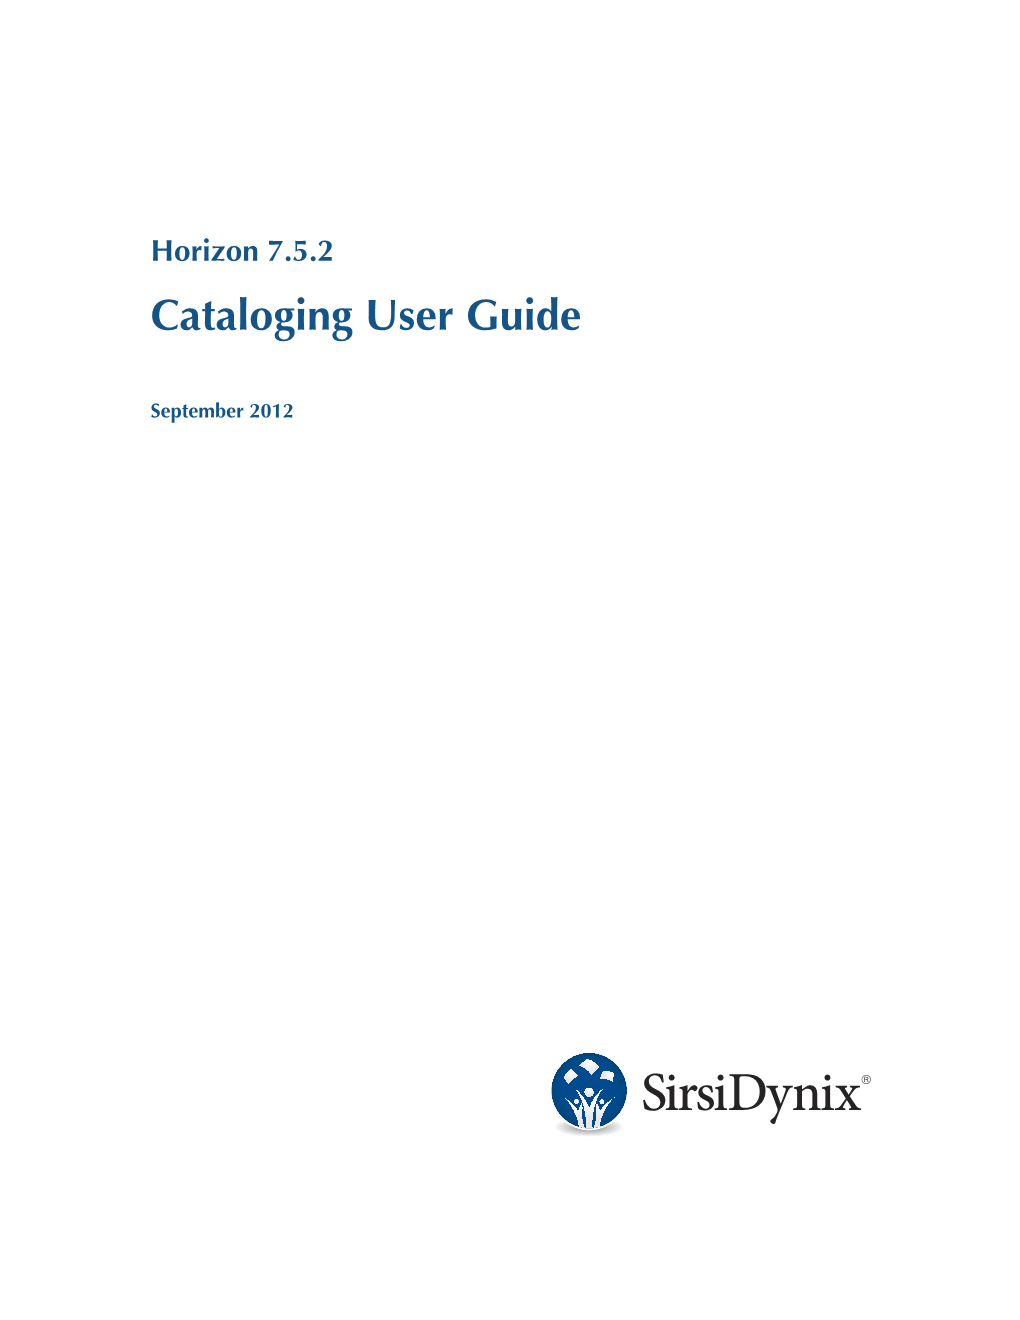 Horizon 7.5.2 Cataloging User Guide